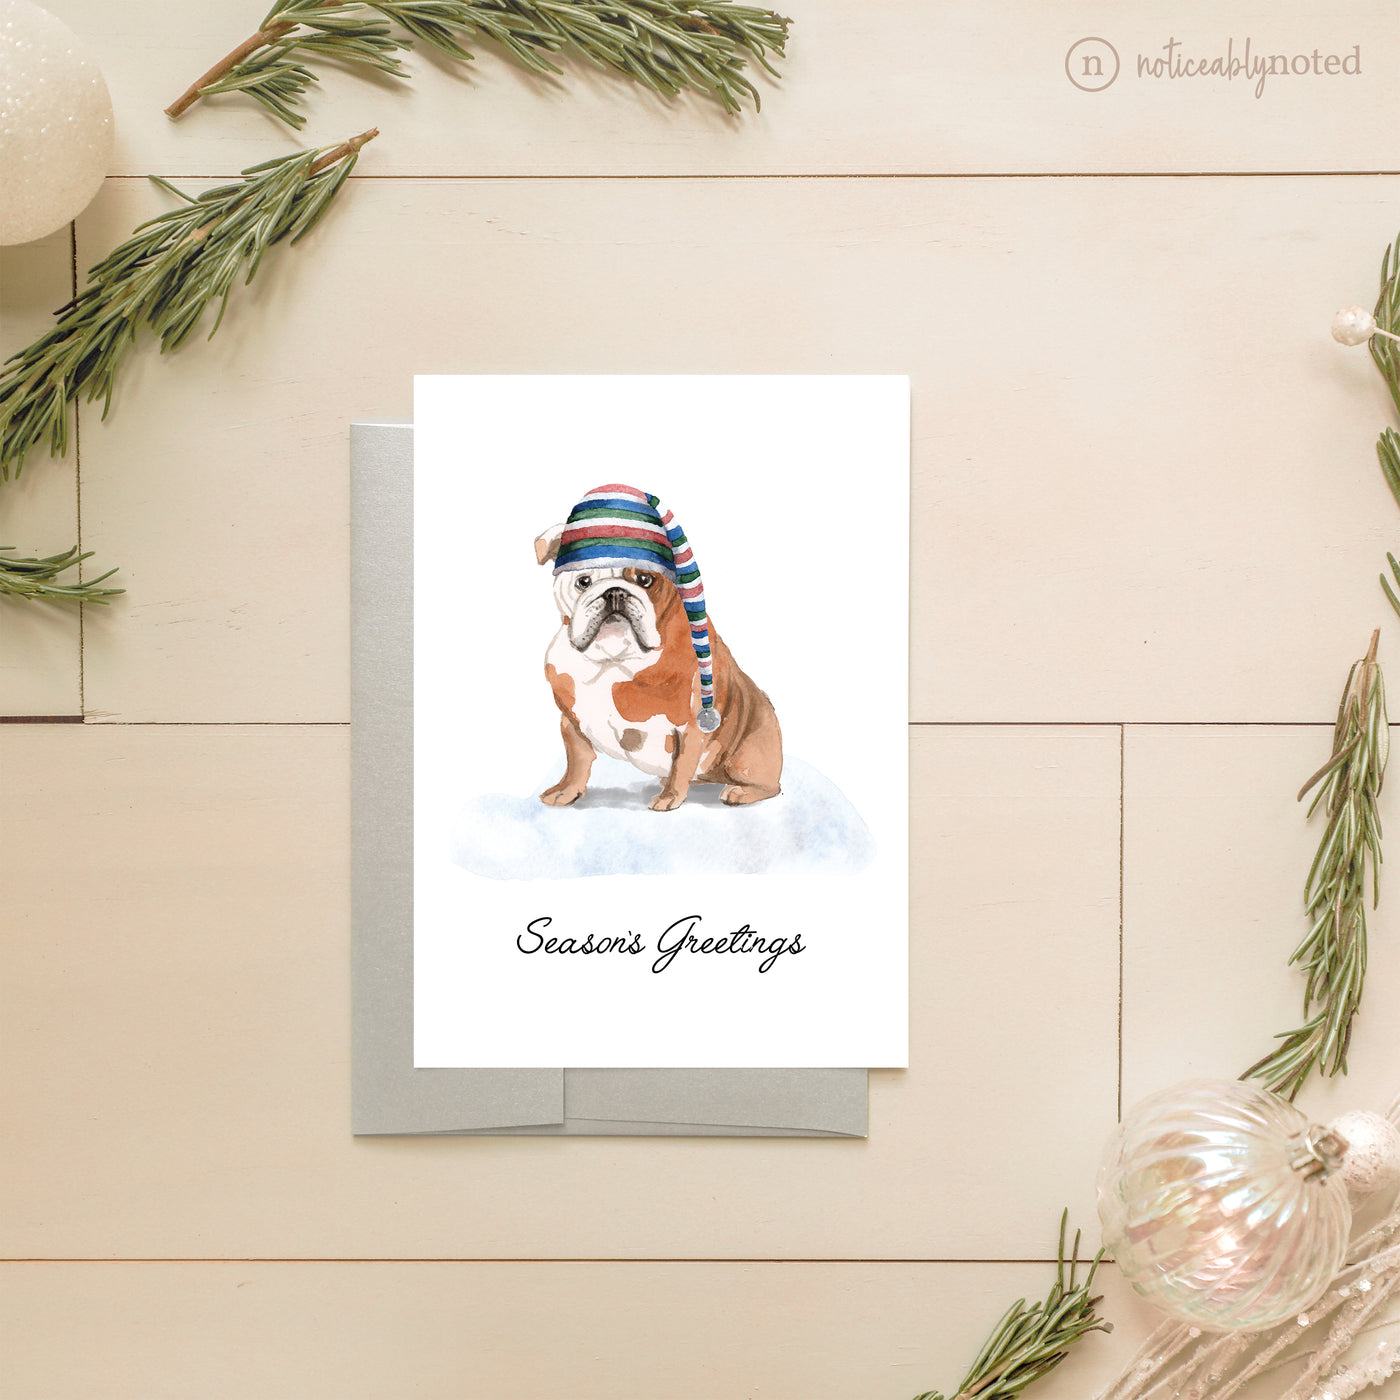 English Bulldog Holiday Greeting Cards | Noticeably Noted